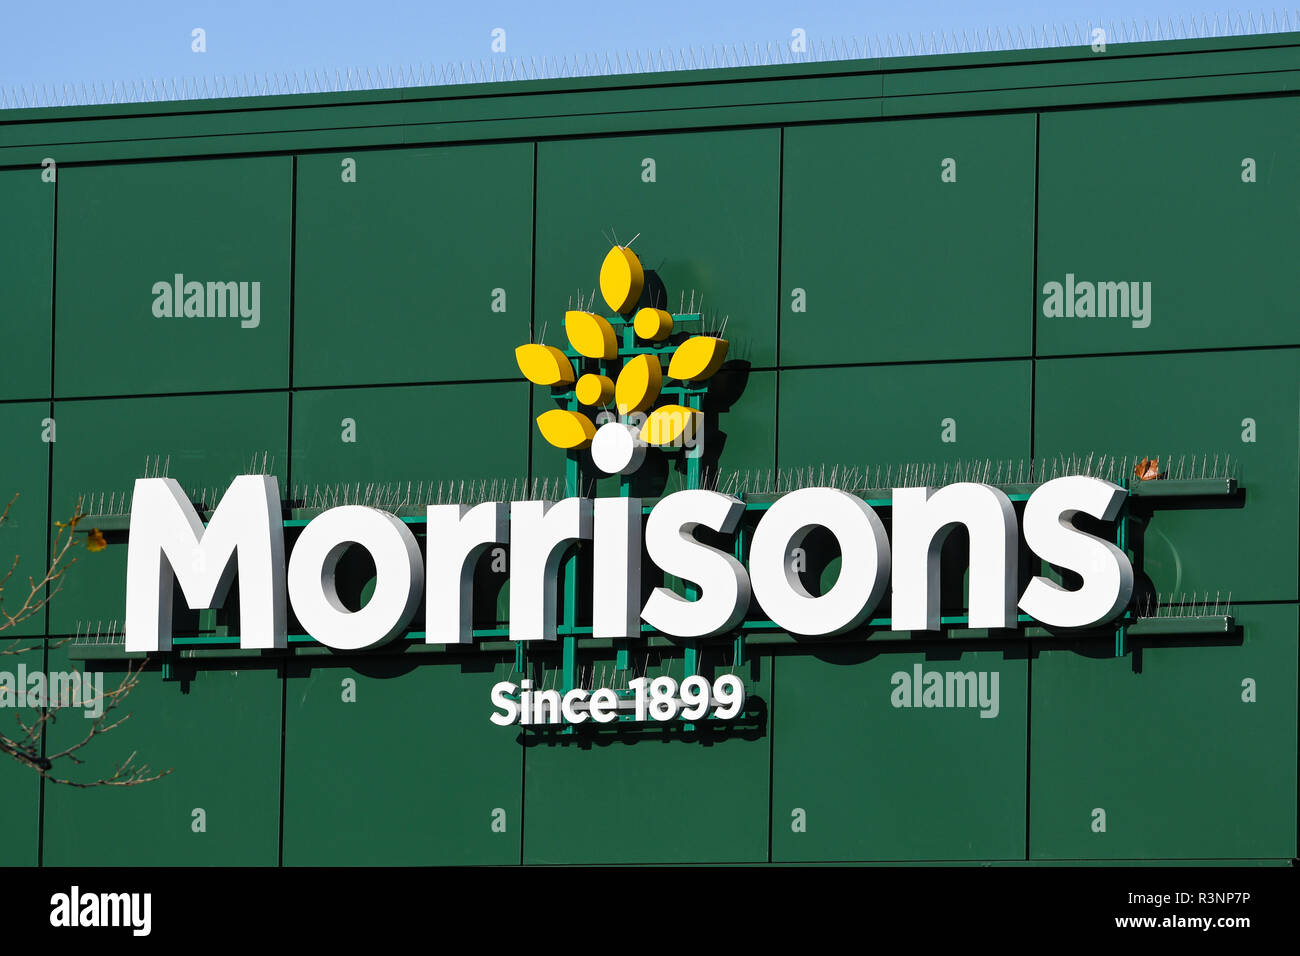 morrisons supermarket sign Stock Photo